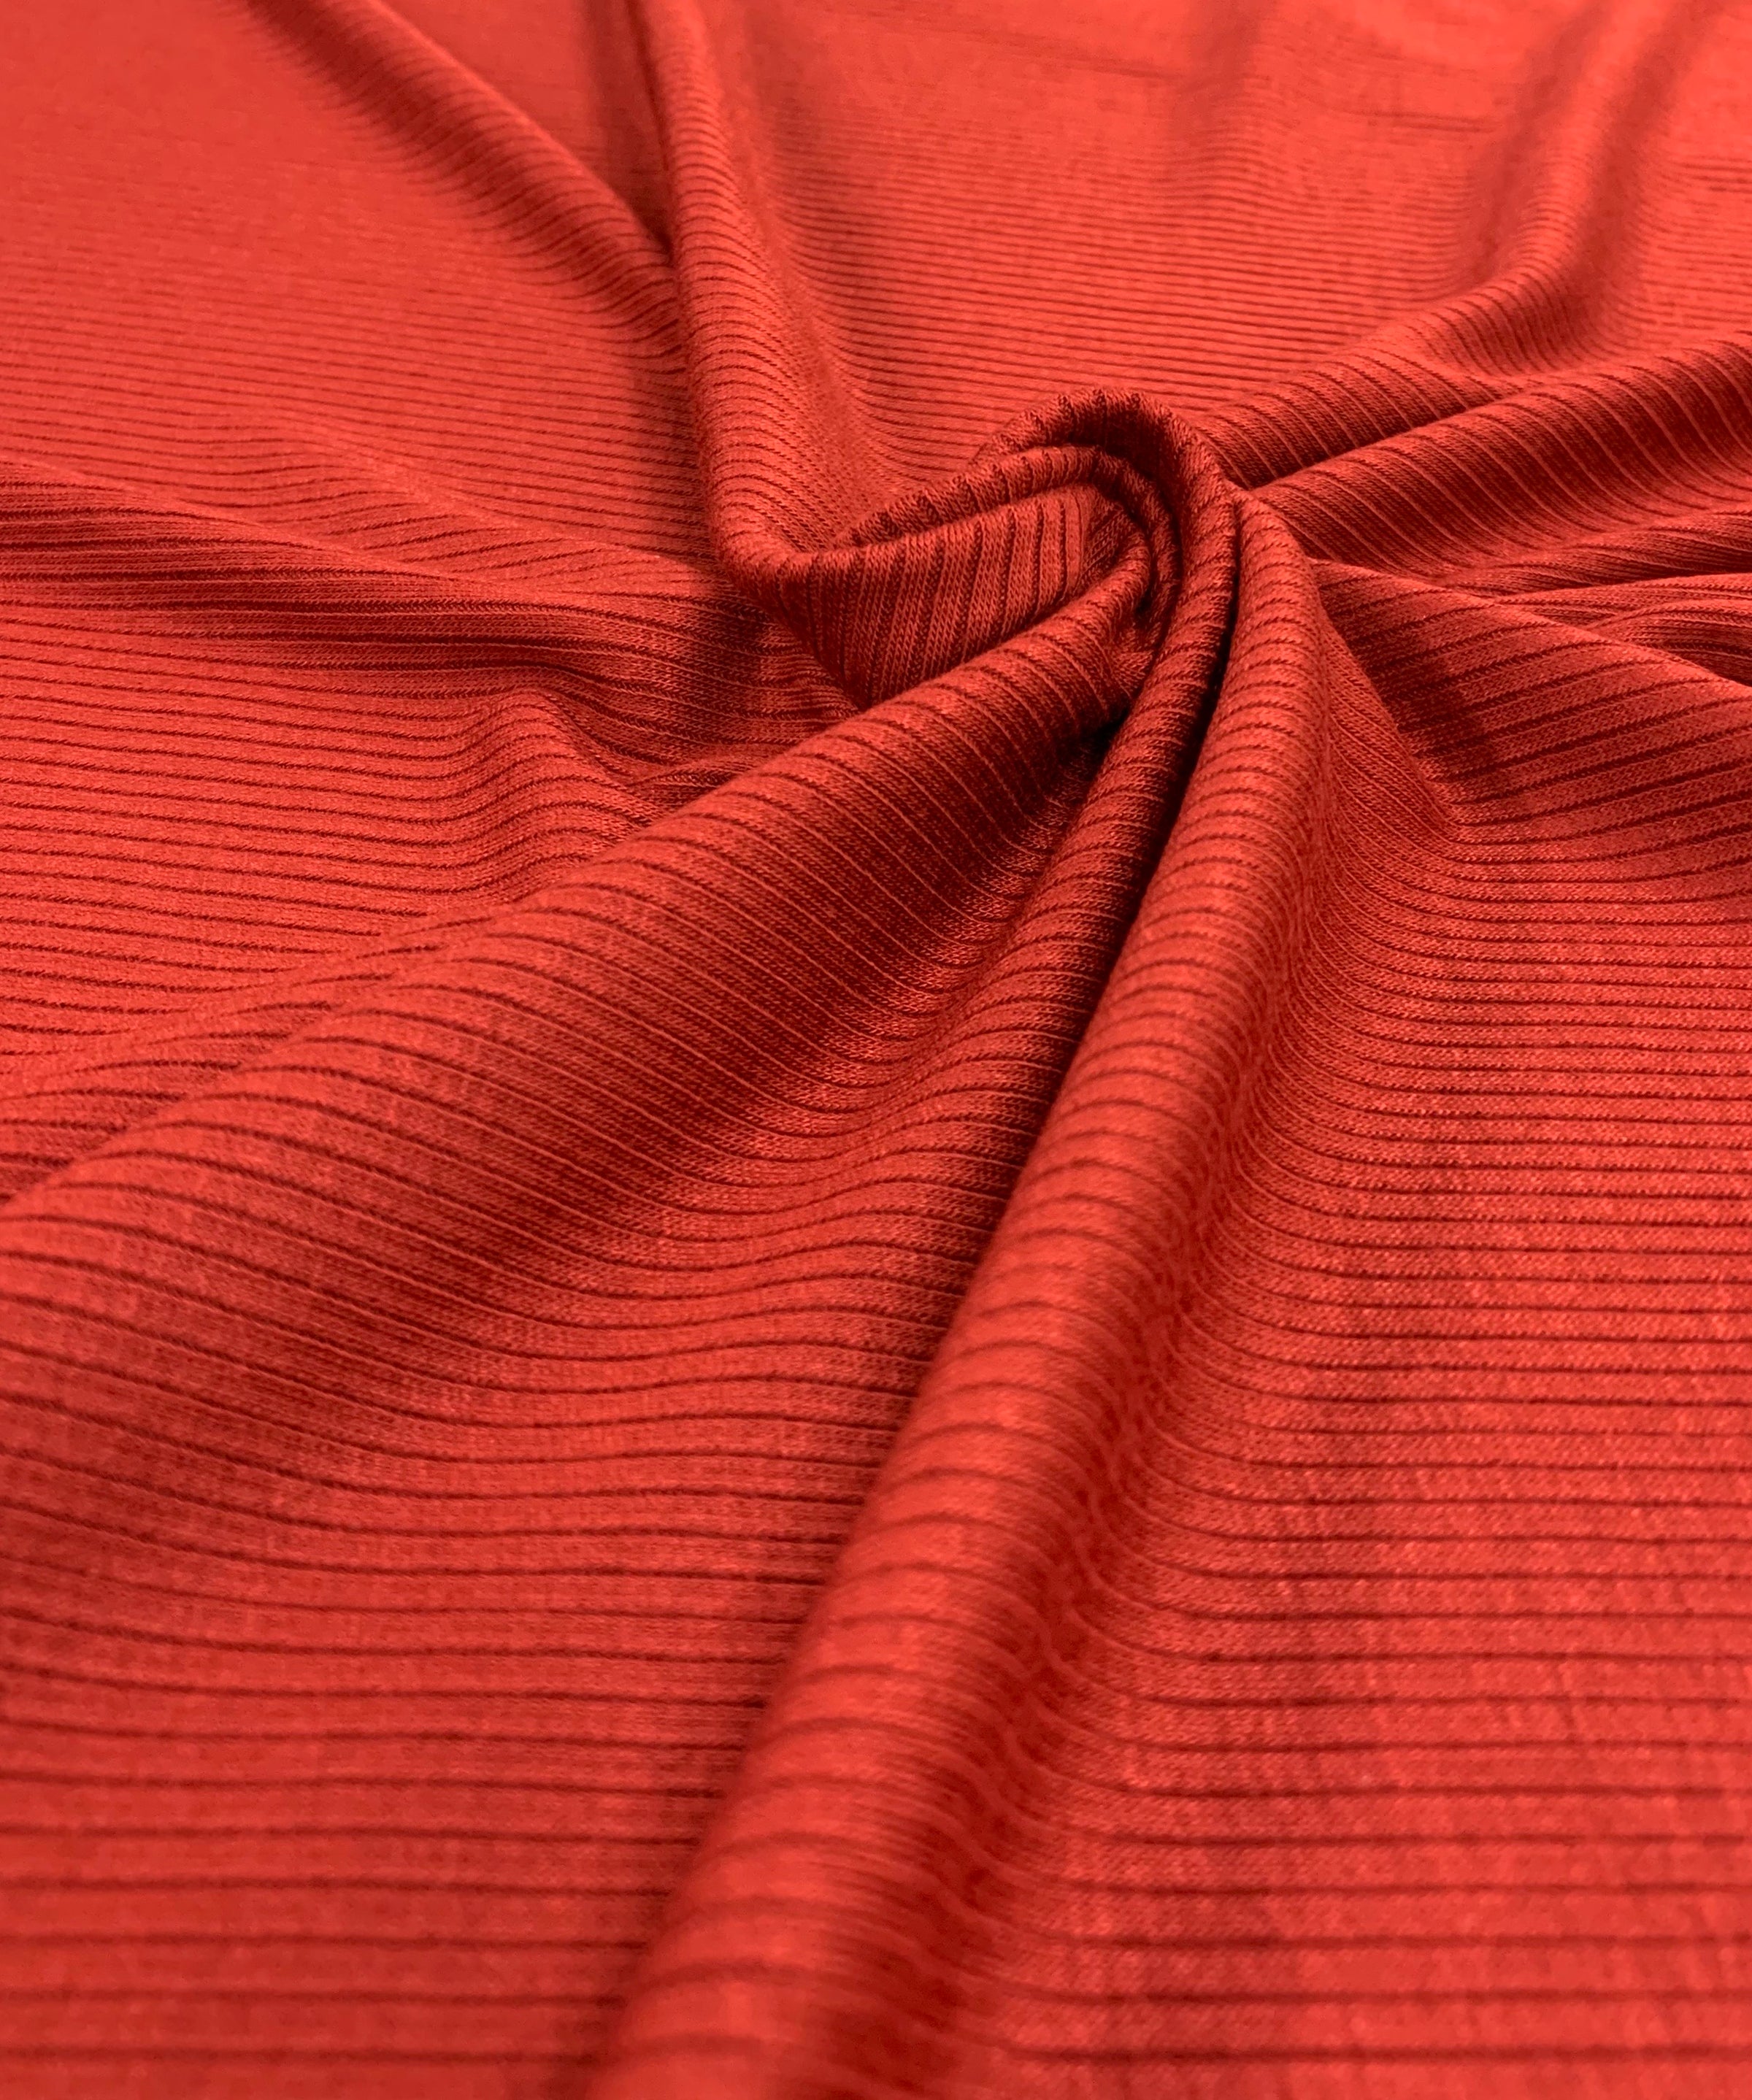 Dark Heathered Gray Stretch Cotton and Modal 2x2 Rib Knit - Rib